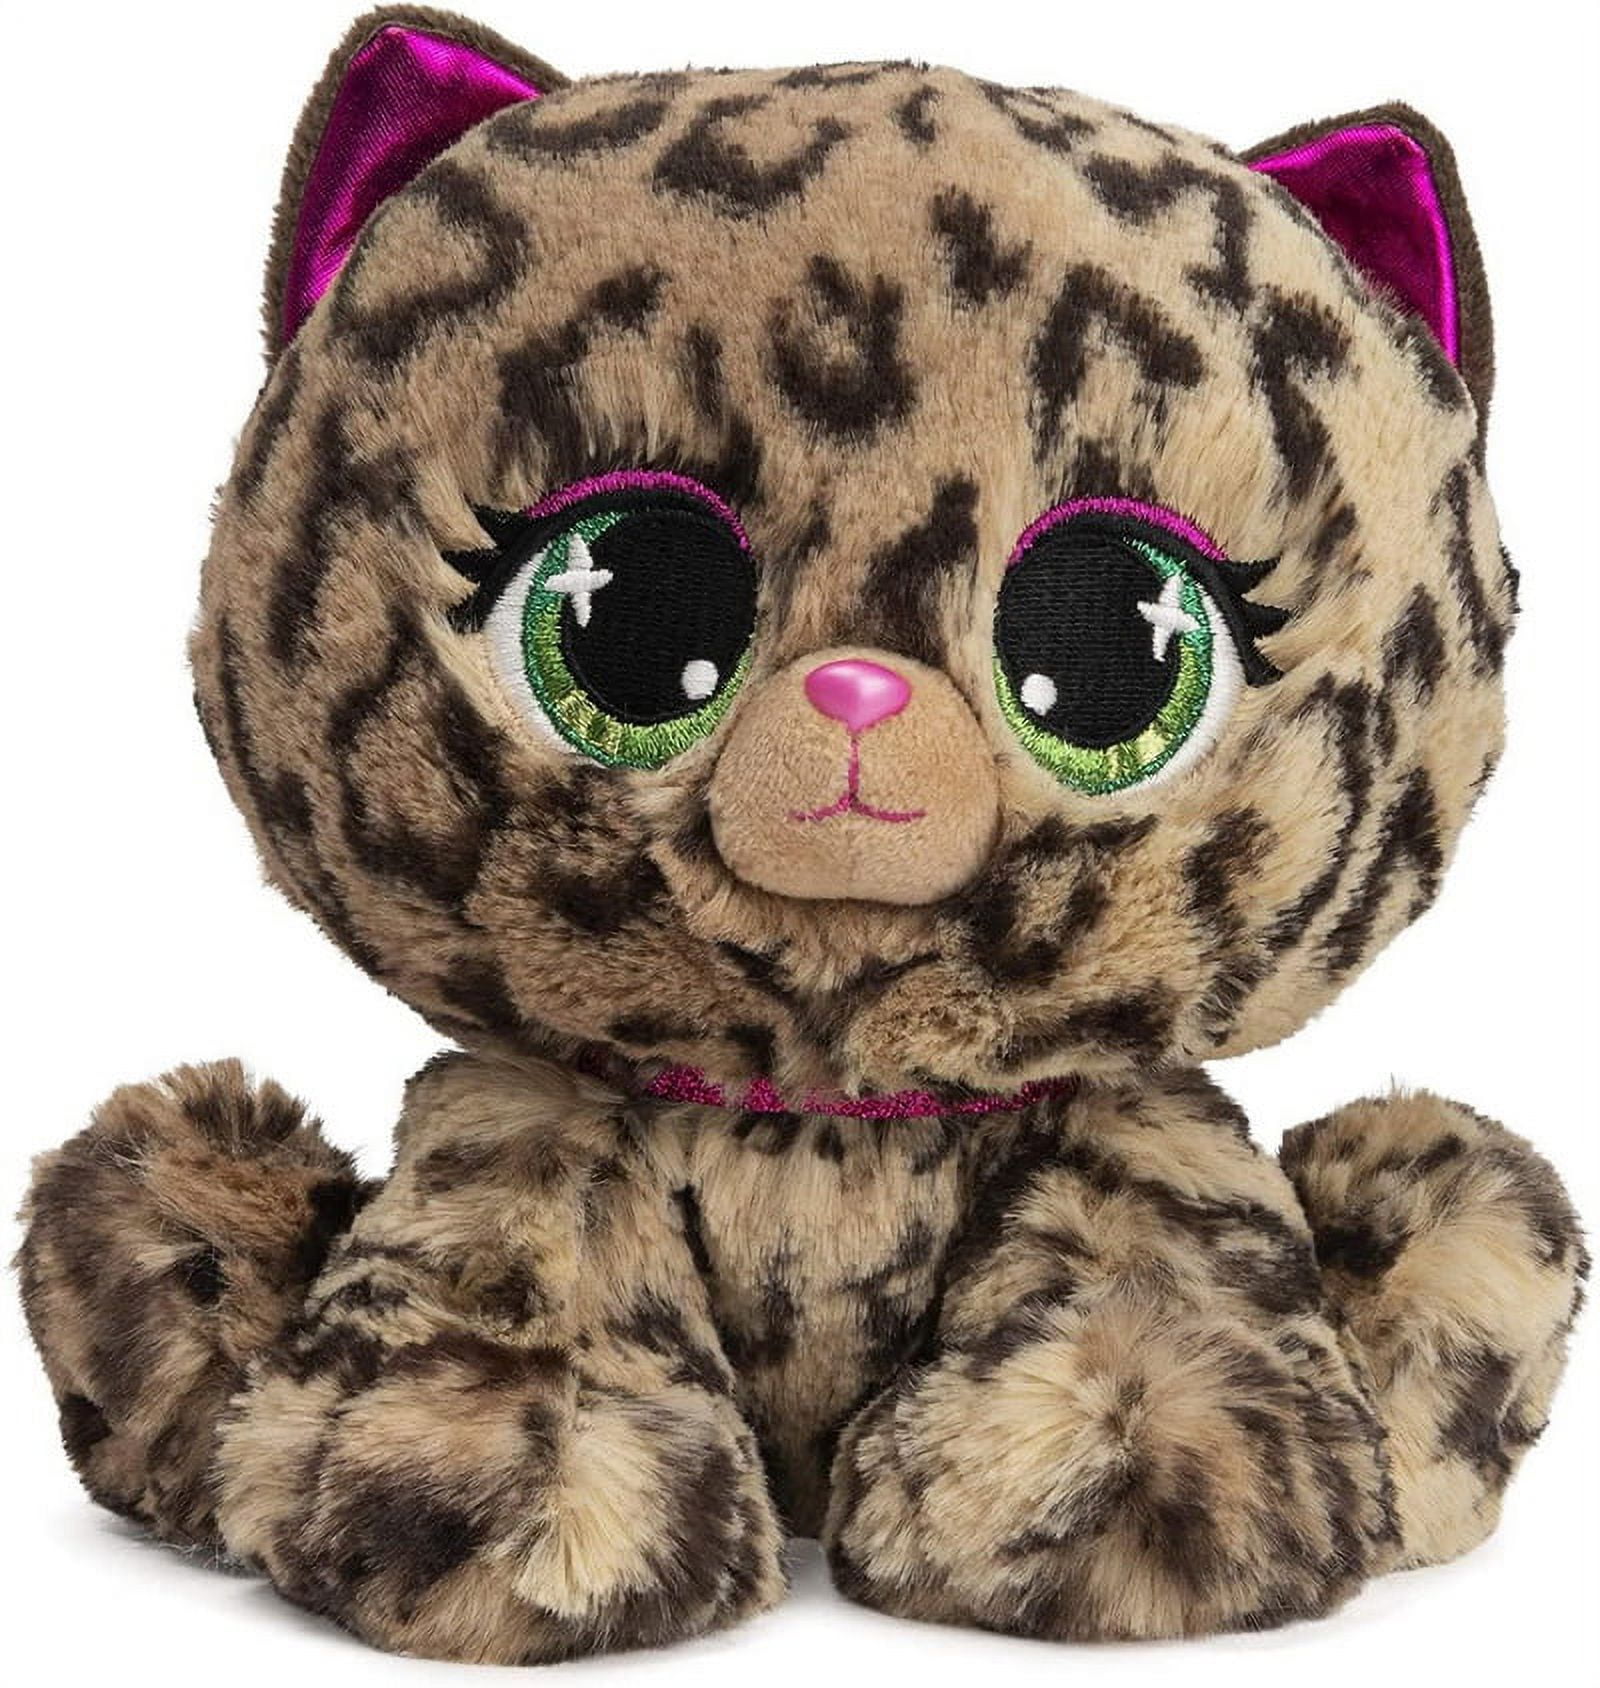 P.Lushes Designer Fashion Pets Limited-Edition 24kt Carti Snow Leopard  Premium Stuffed Animal Soft Plush, Gold Metallic, 6”